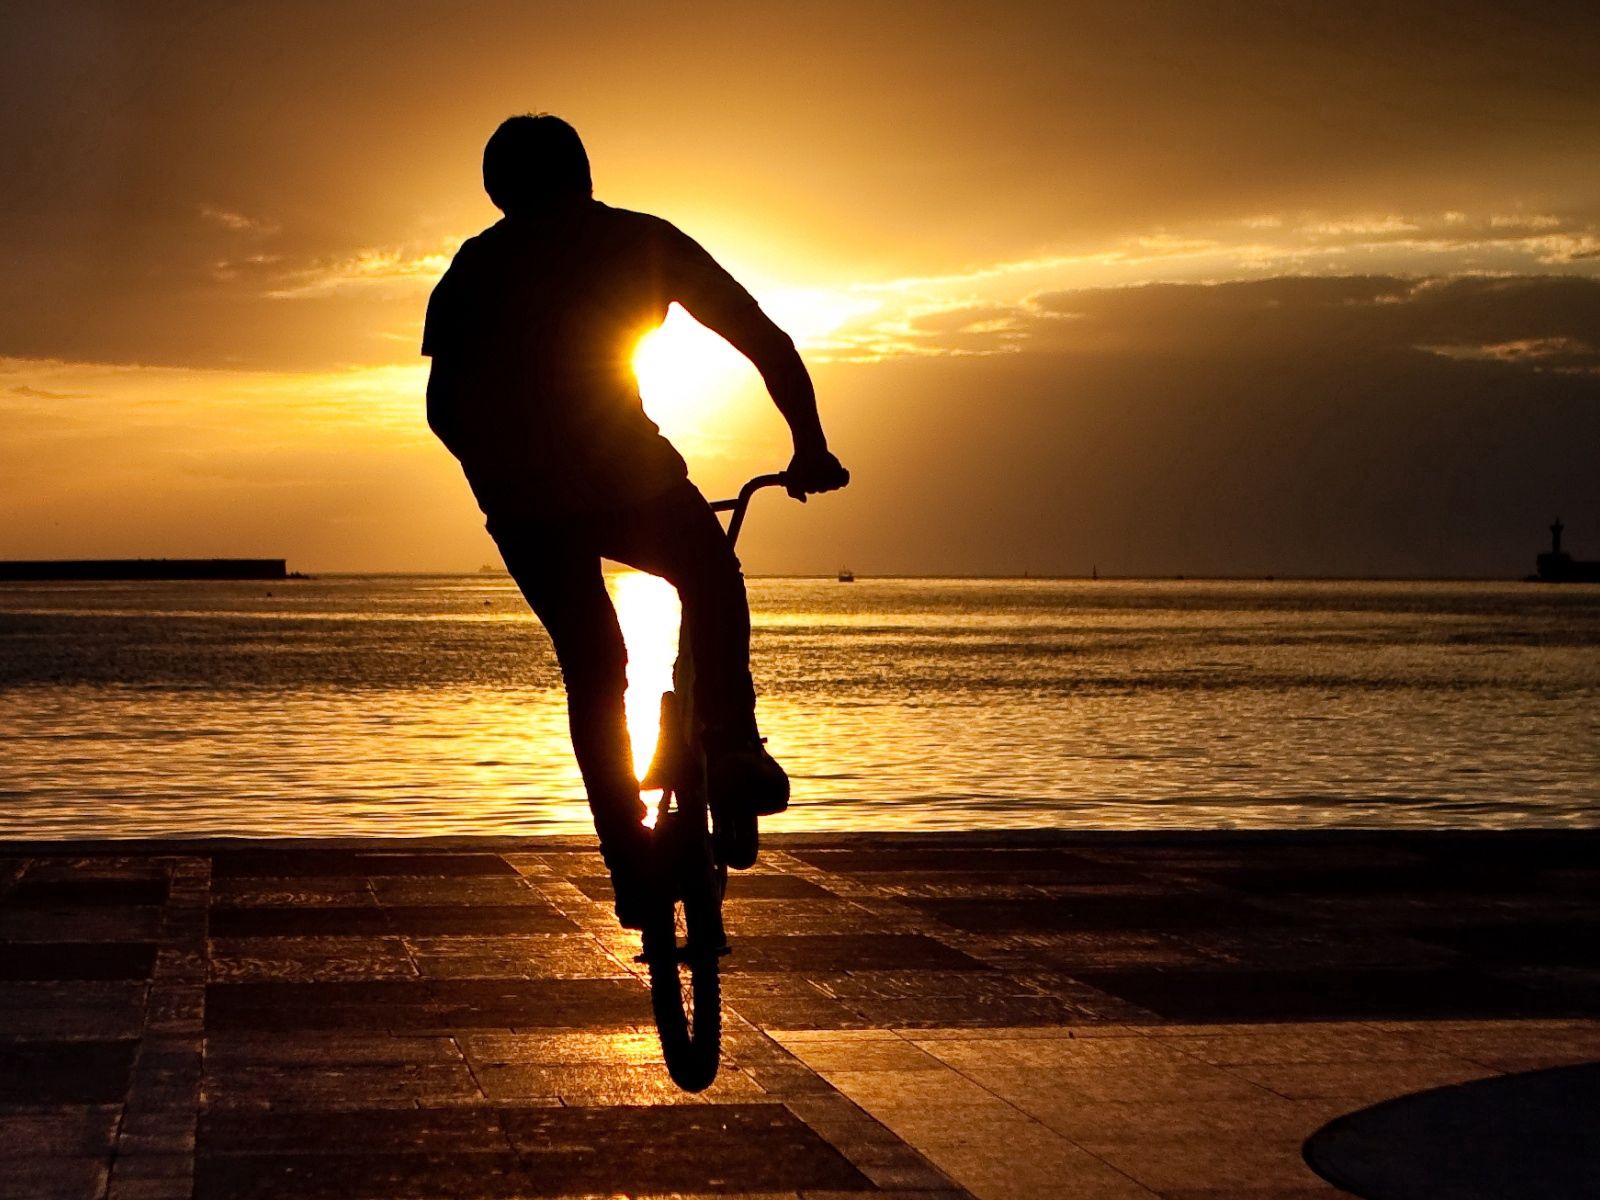 sports, embankment, trick, jump, bounce, quay, extreme, sun, cyclist